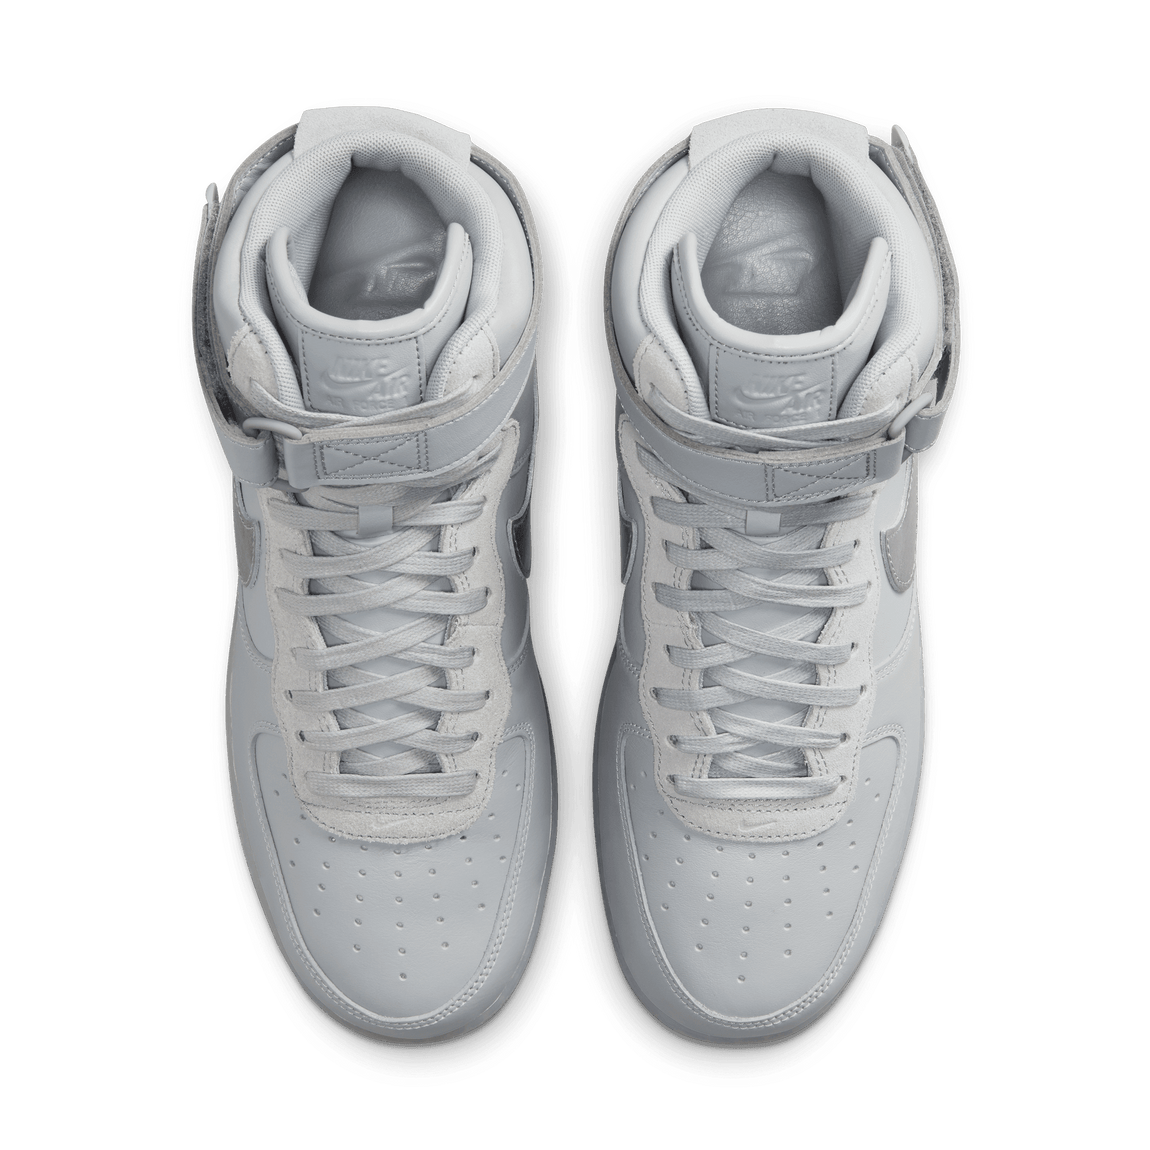 Nike Air Force 1 High '07 Premium (Wolf Grey/Metallic Silver-Volt) - Nike Air Force 1 High '07 Premium (Wolf Grey/Metallic Silver-Volt) - 